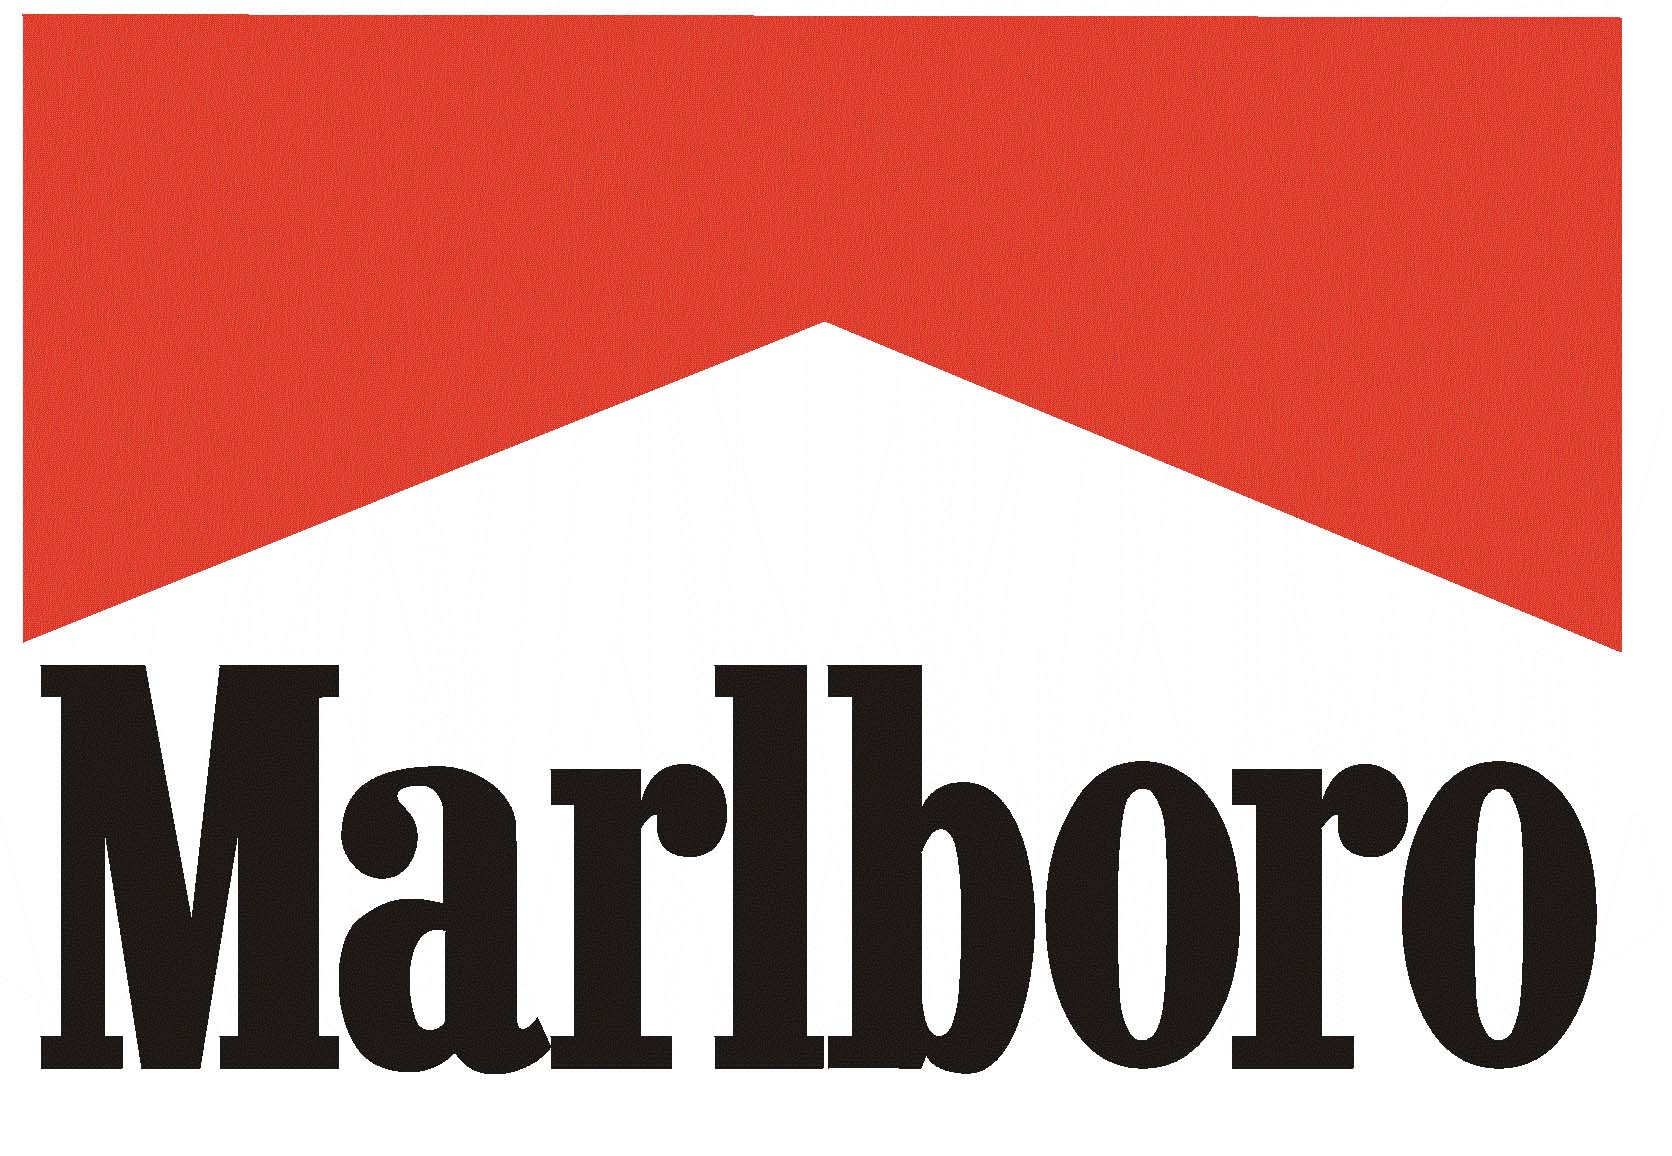 Marlboro Logo Wallpapers Wallpaper Cave